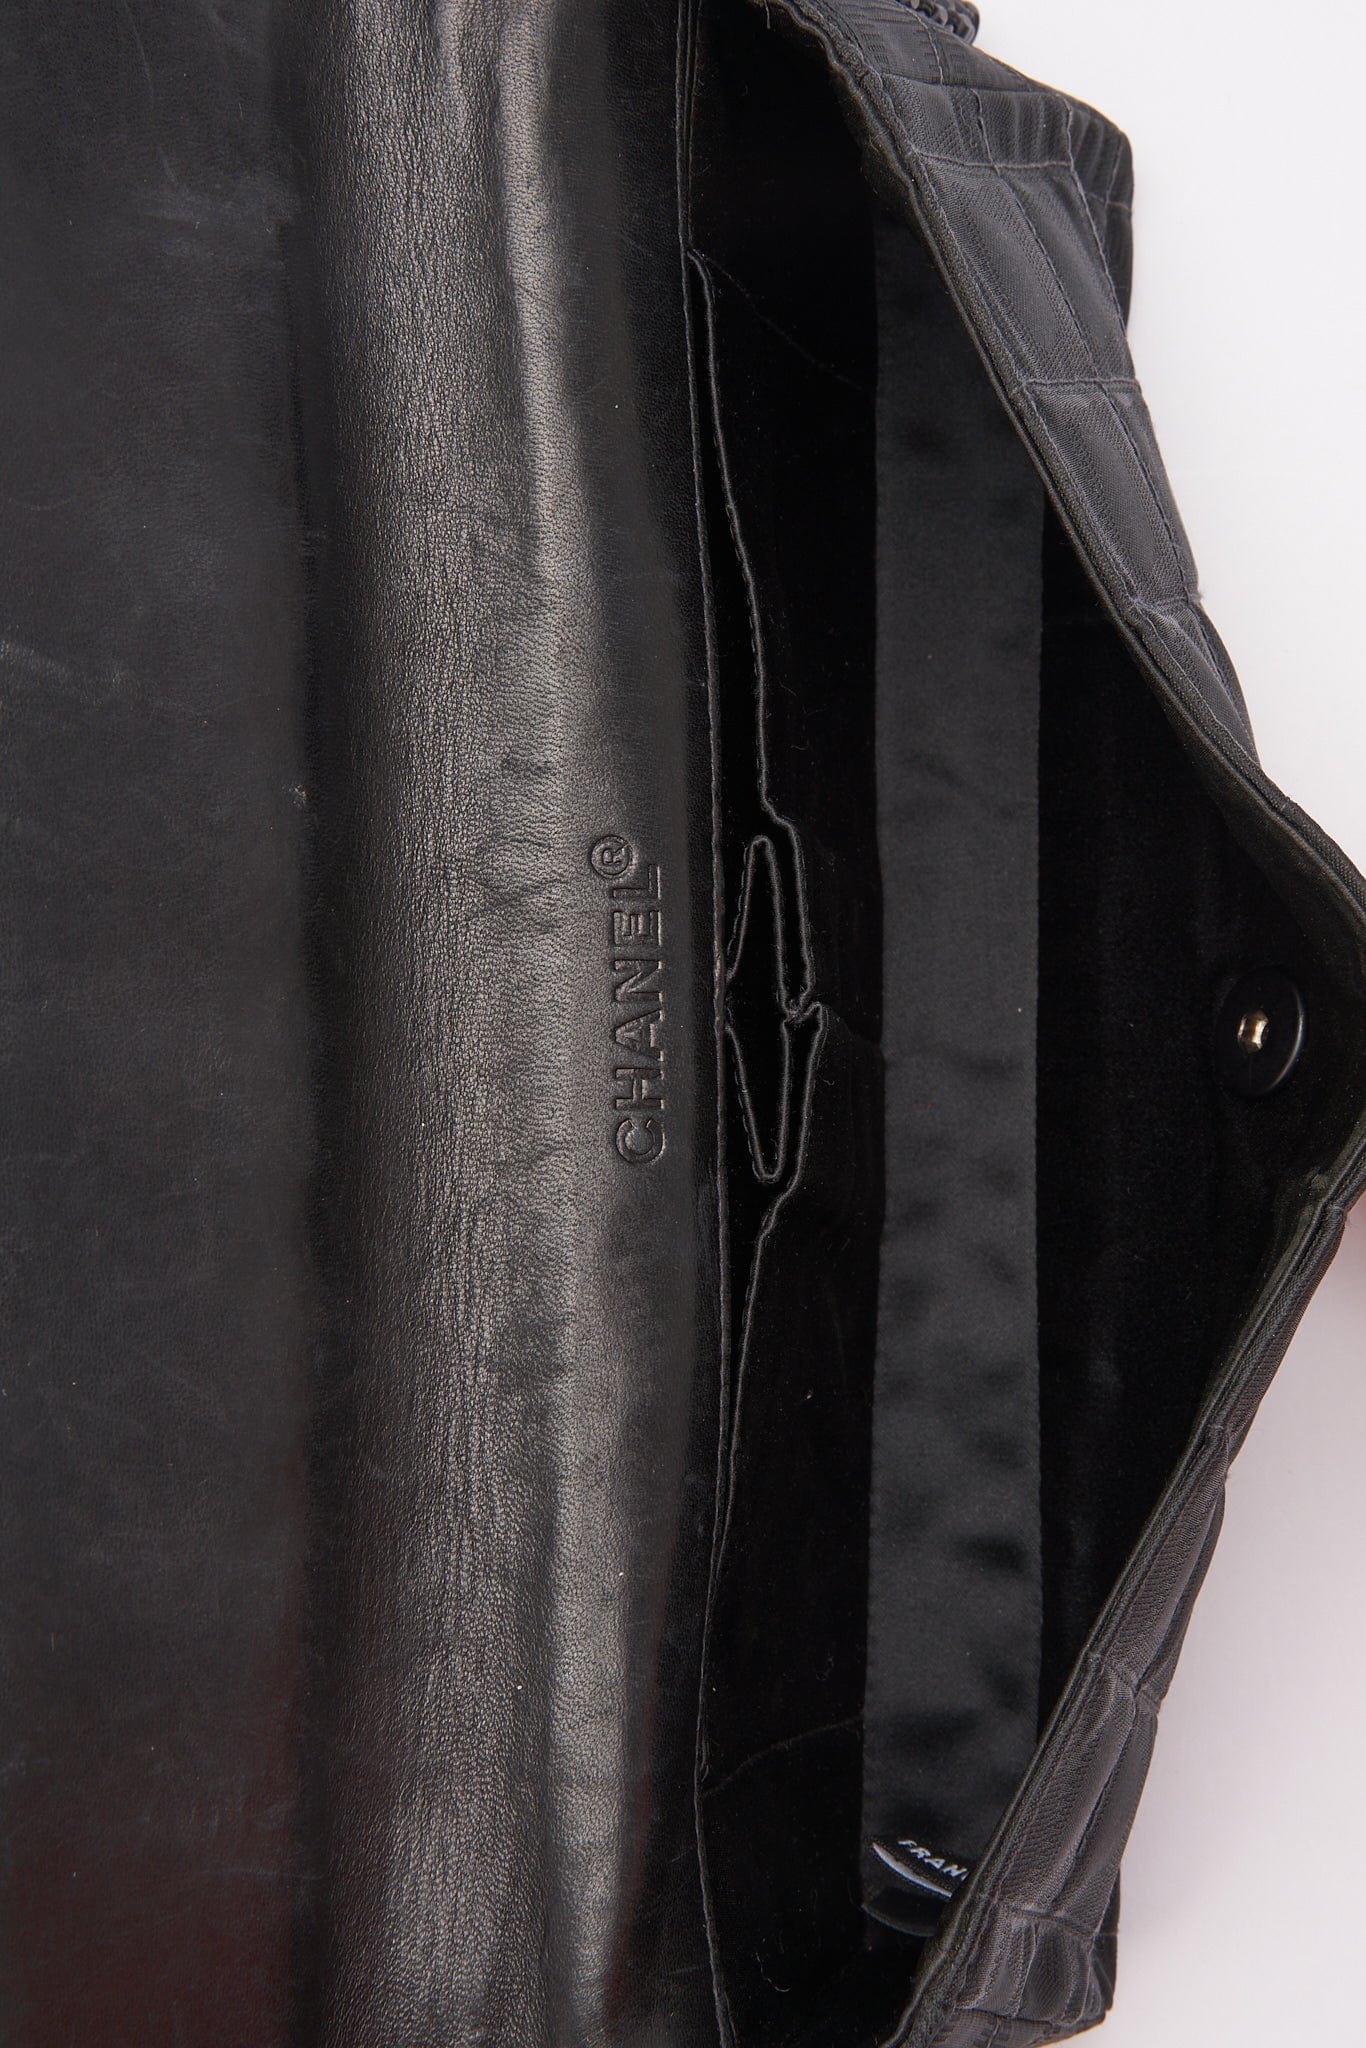 Chanel Black Nylon Travel Line Chocolate Bar Flap Bag